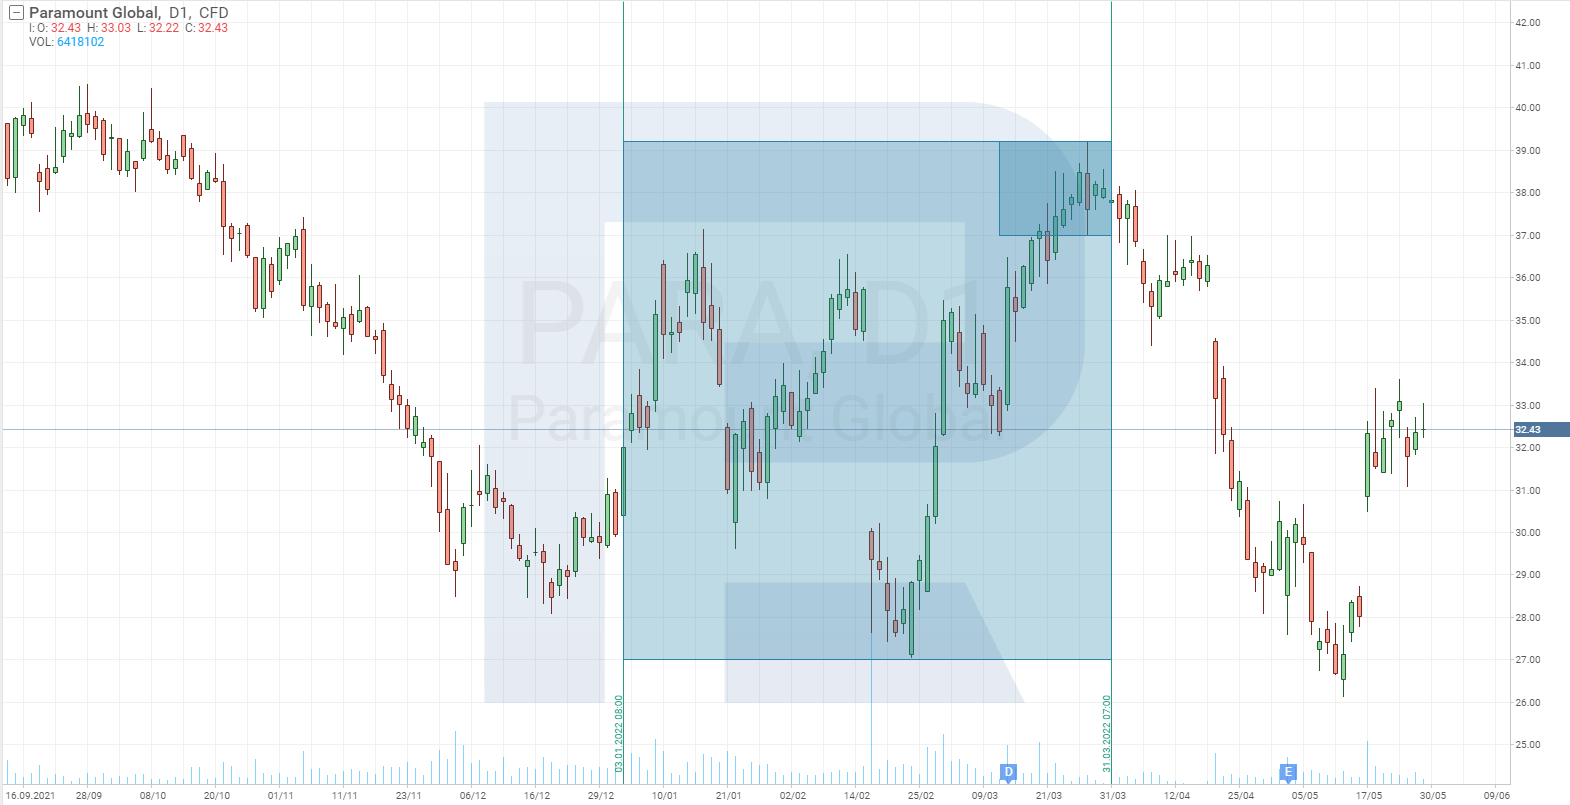 Grafik harga saham Paramount Global